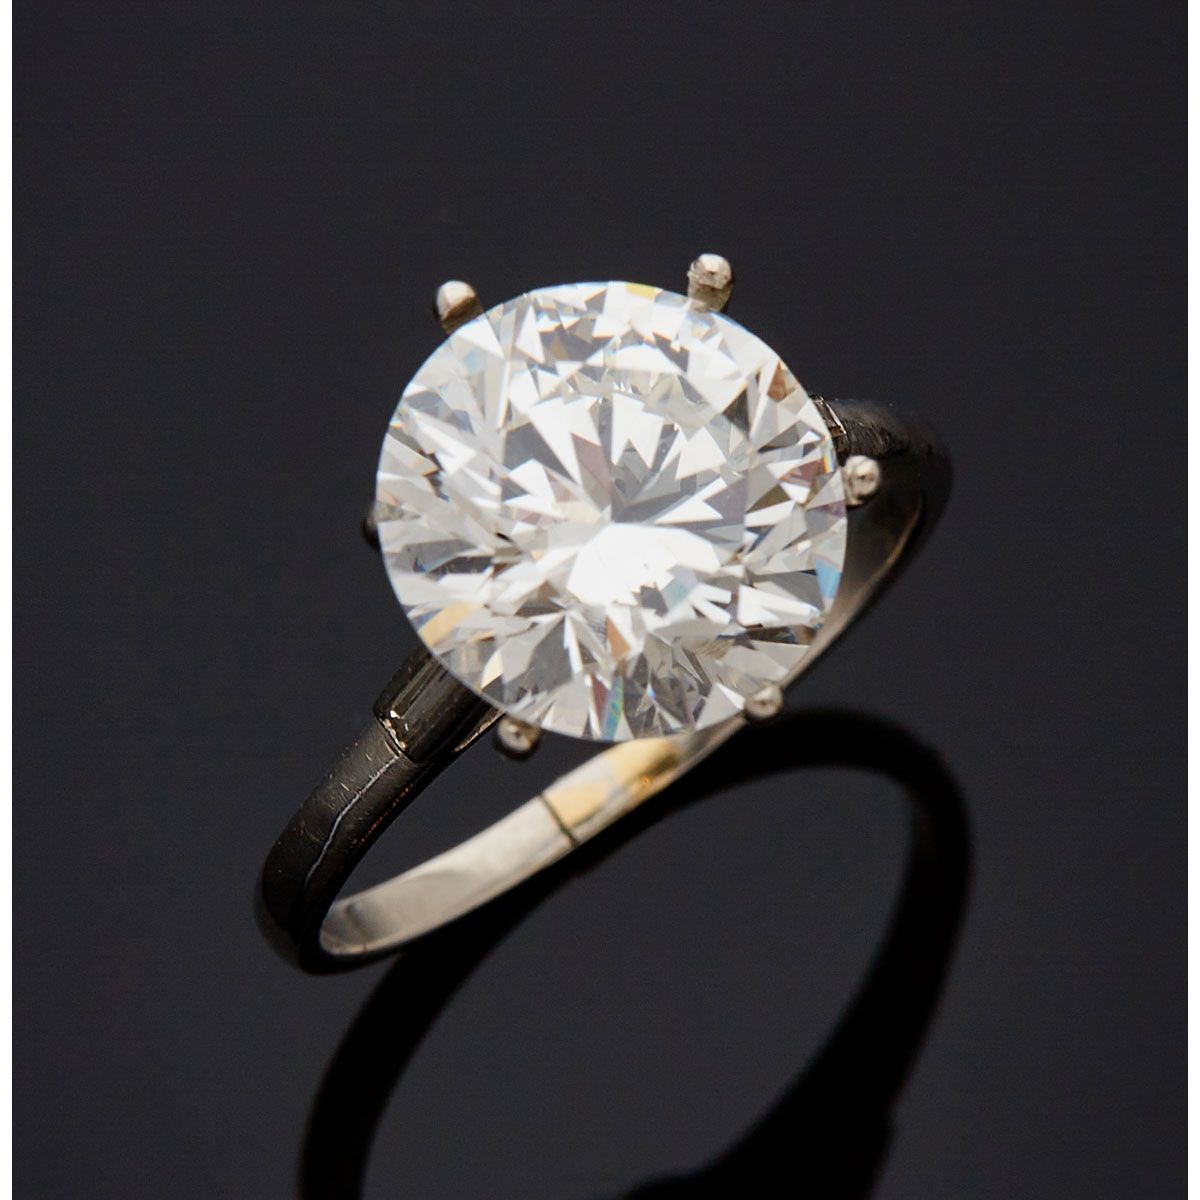 Null 800毫米铂金单颗钻石，镶嵌有六爪的明亮式切割钻石，肩上有两颗长方形切割钻石。

L.F.G.证书编号380968，15-03-2021。

主钻石：&hellip;